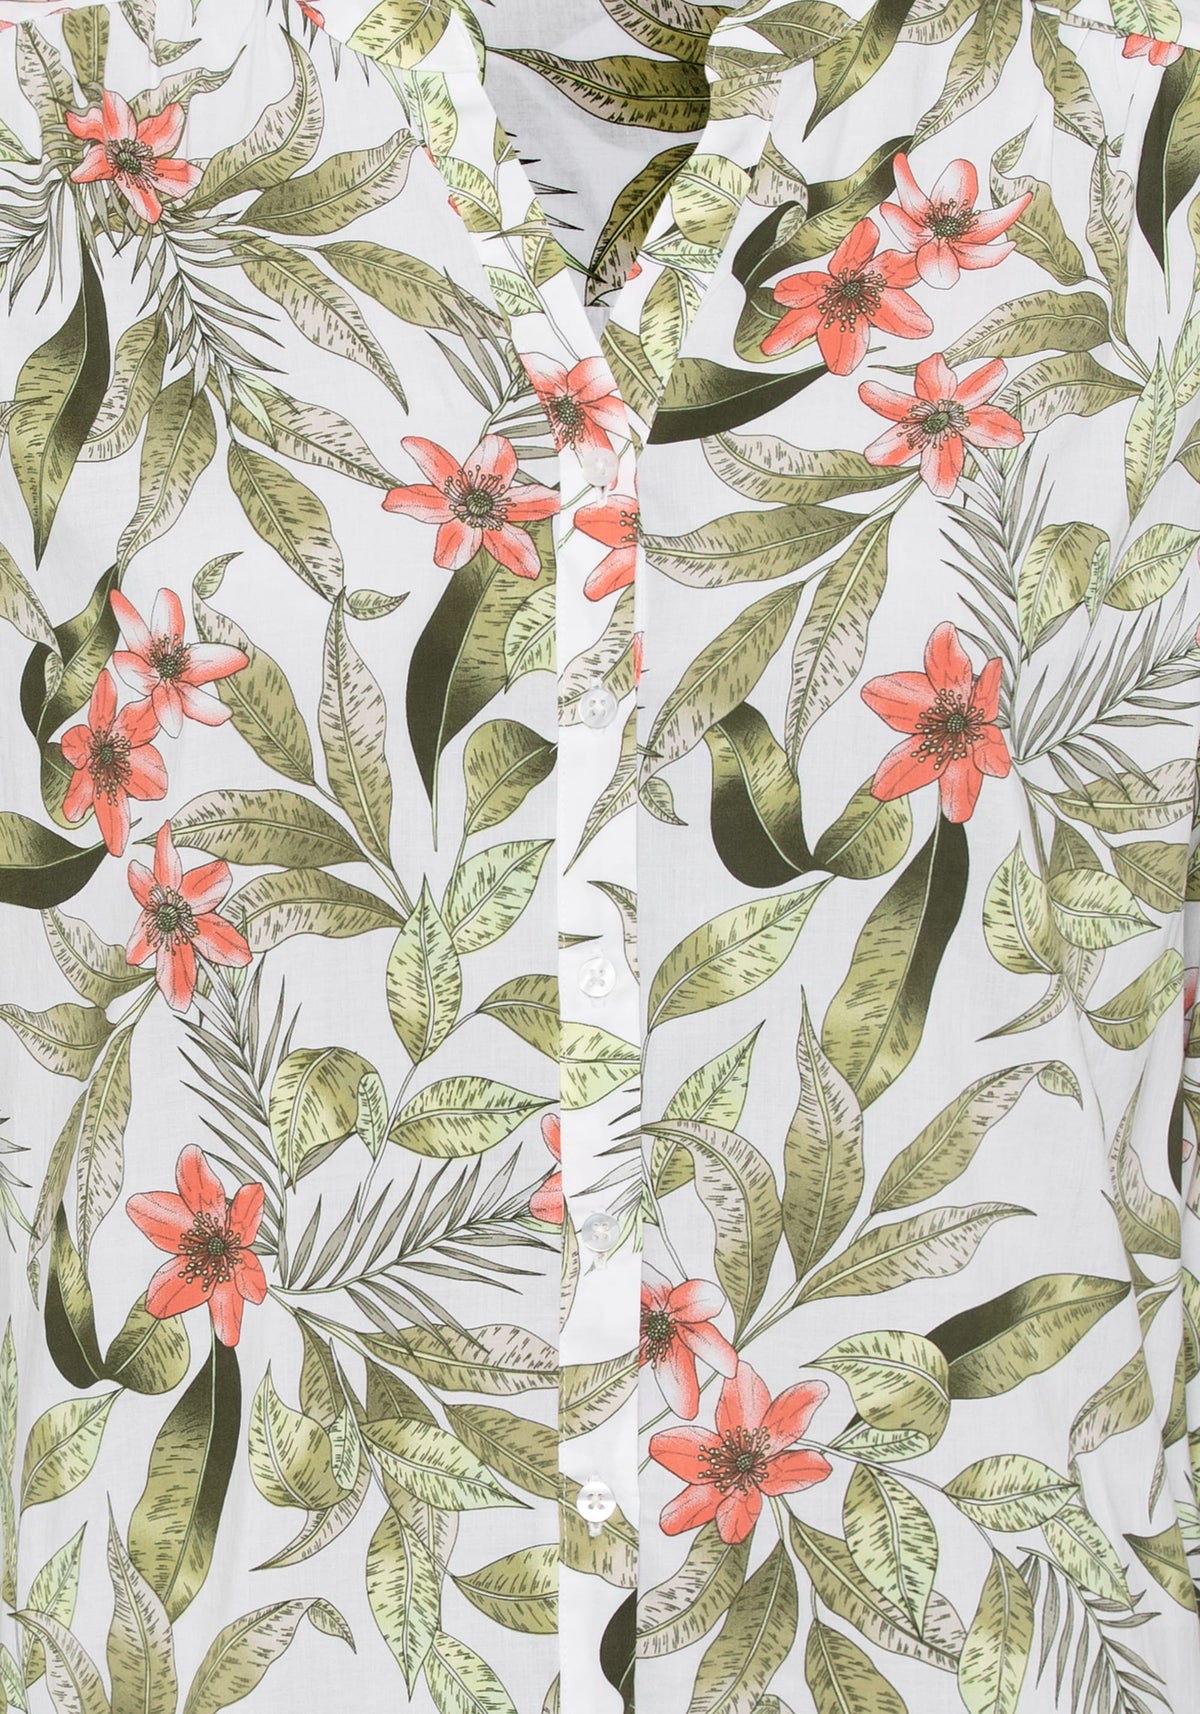 3/4 Cotton Viscose Tropic Jungle Print Tunic Shirt